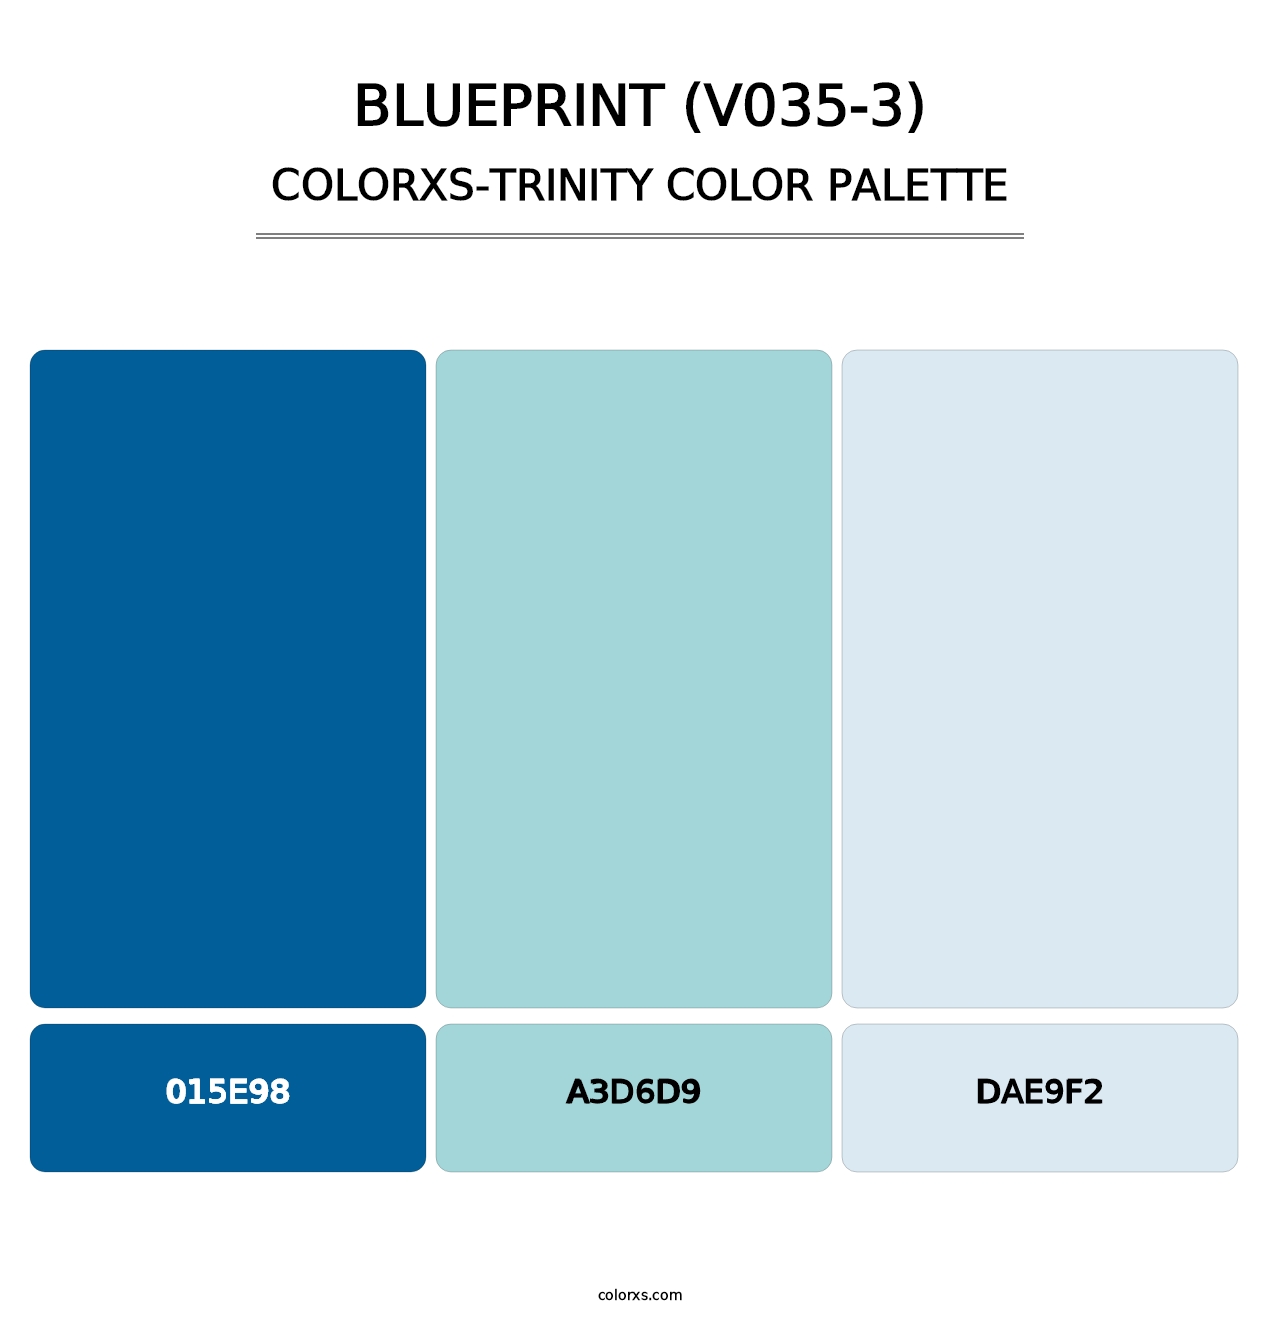 Blueprint (V035-3) - Colorxs Trinity Palette